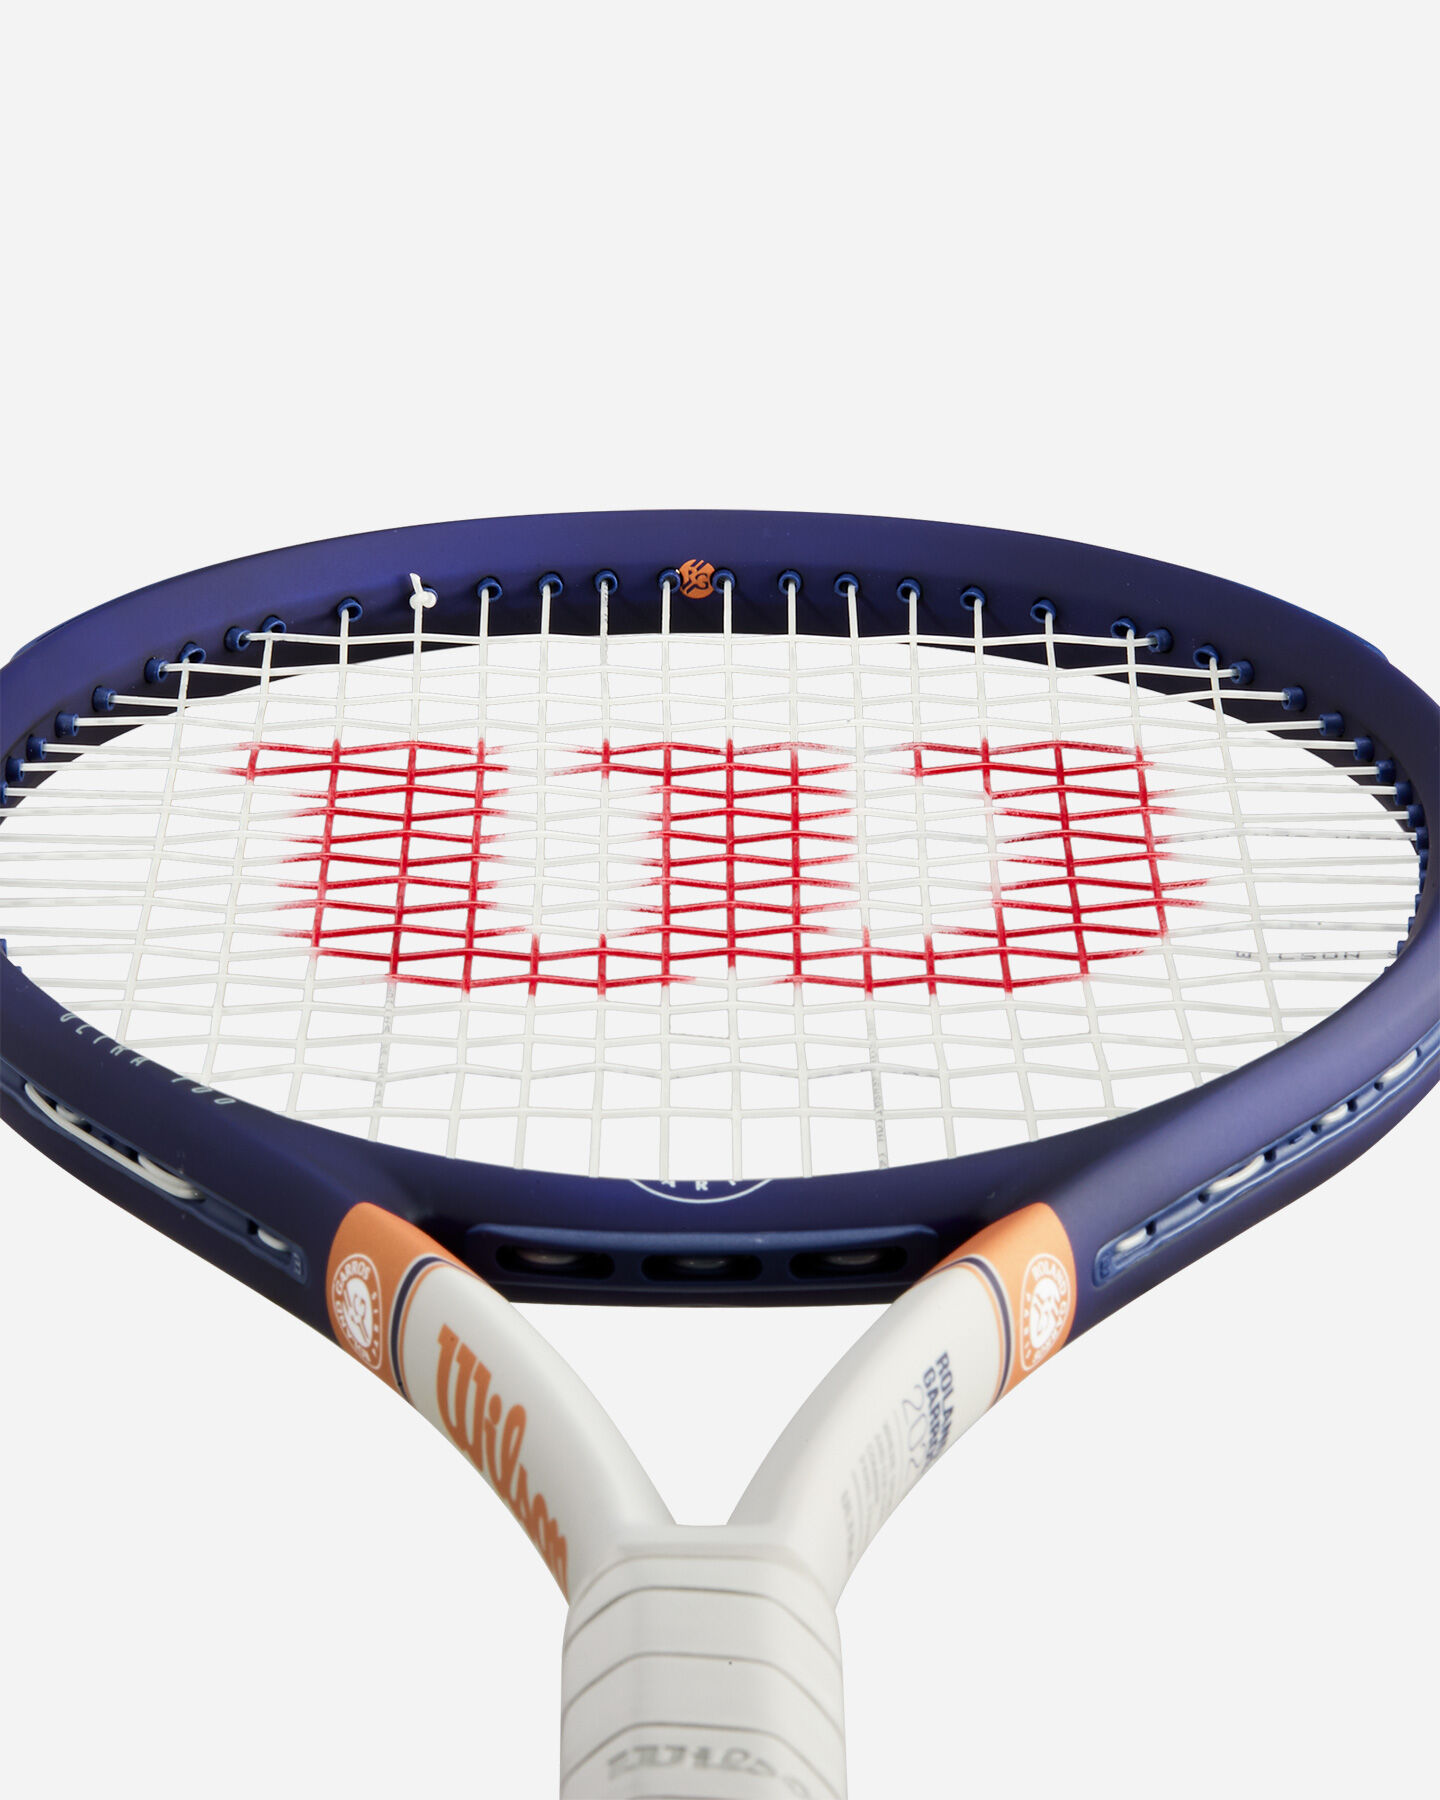  Telaio tennis WILSON  ULTRA 100 ROLAND GARROS S5343796|UNI|2 scatto 4